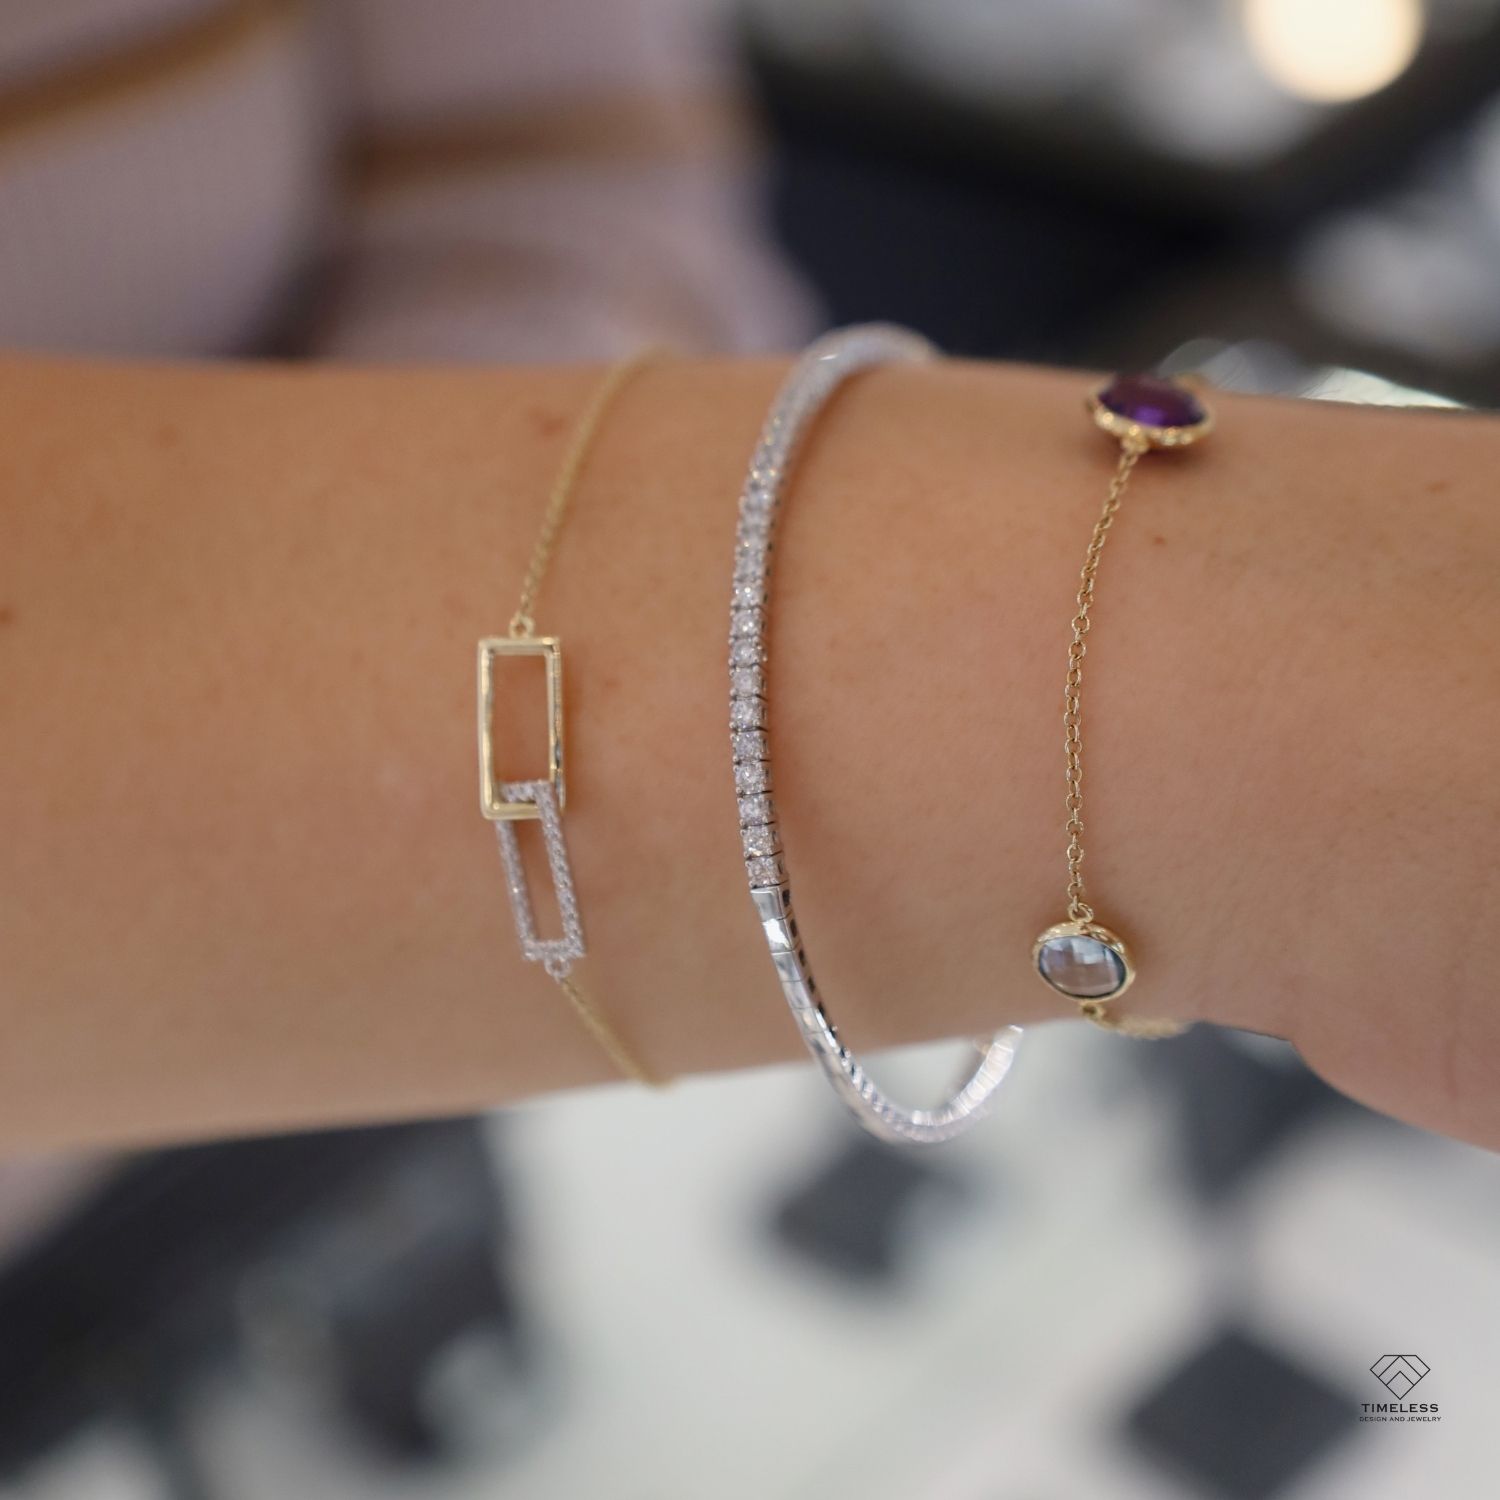 Custom Jewelry Bracelets in Salt Lake City by Timeless Design and Jewelry